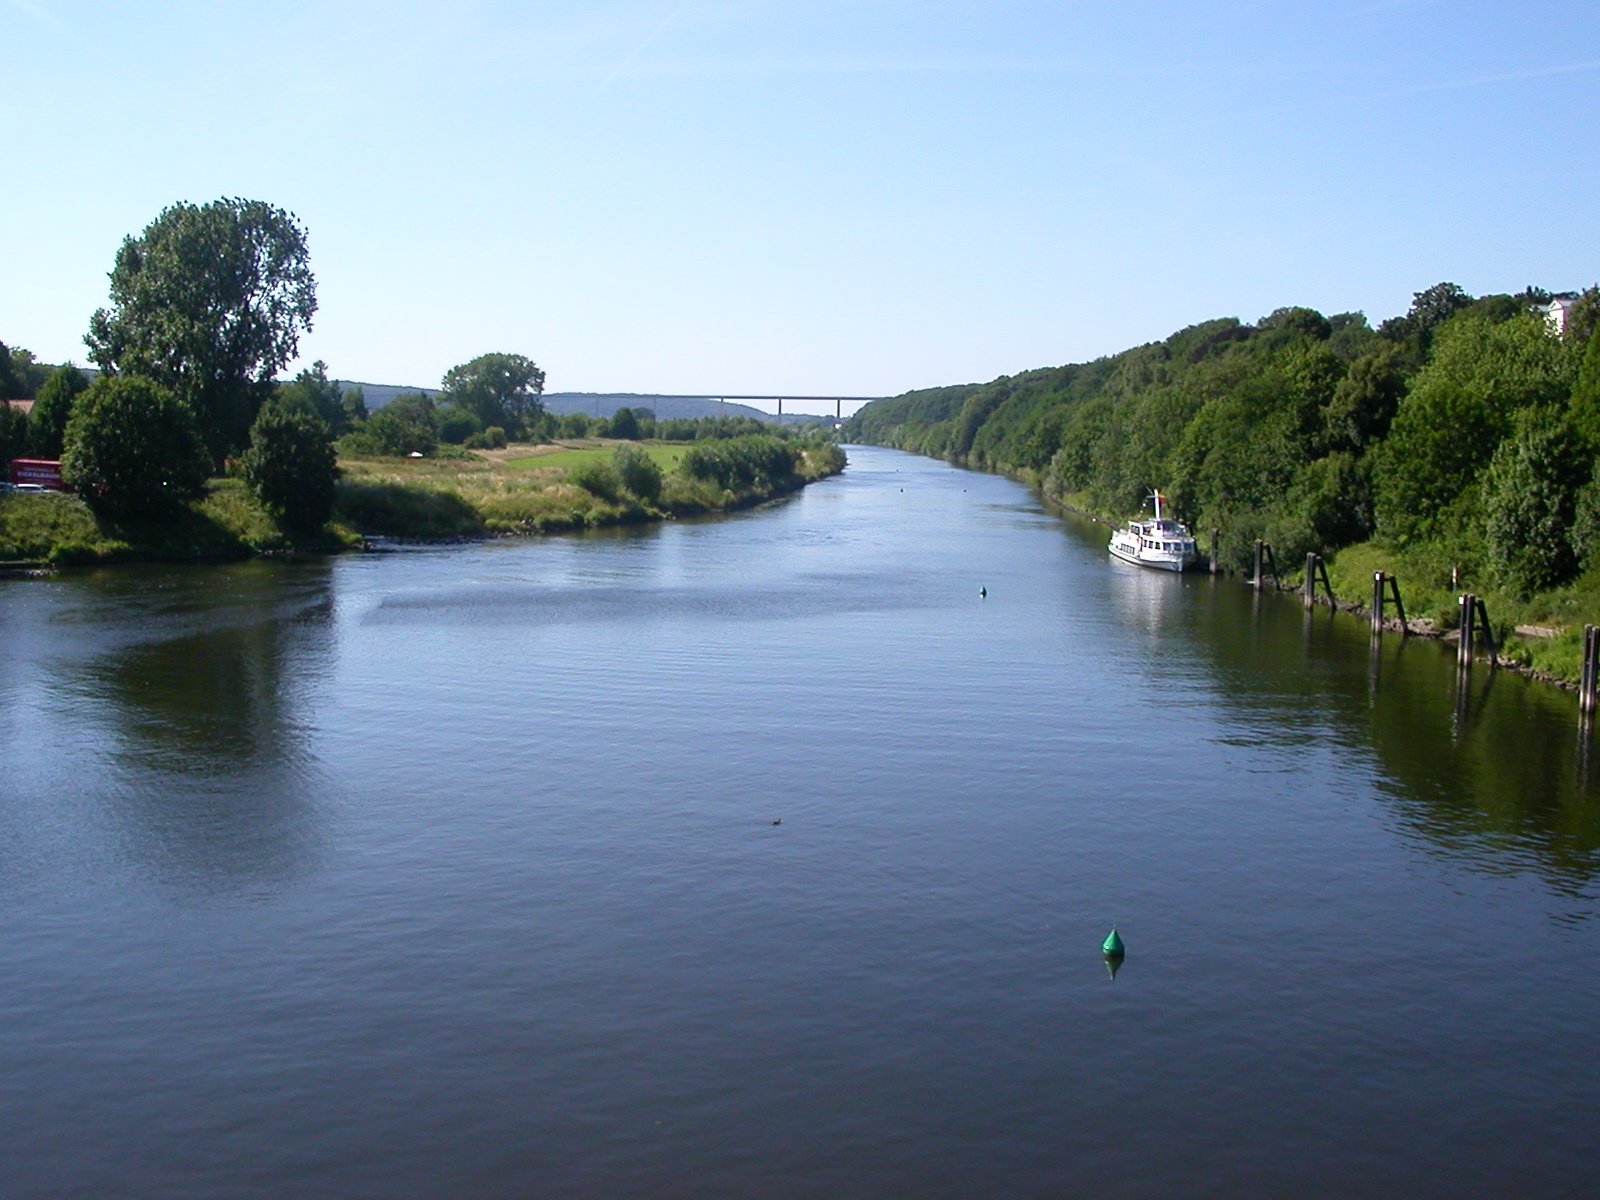 File:River-ruhr-essen-kettwig.jpeg - Wikimedia Commons